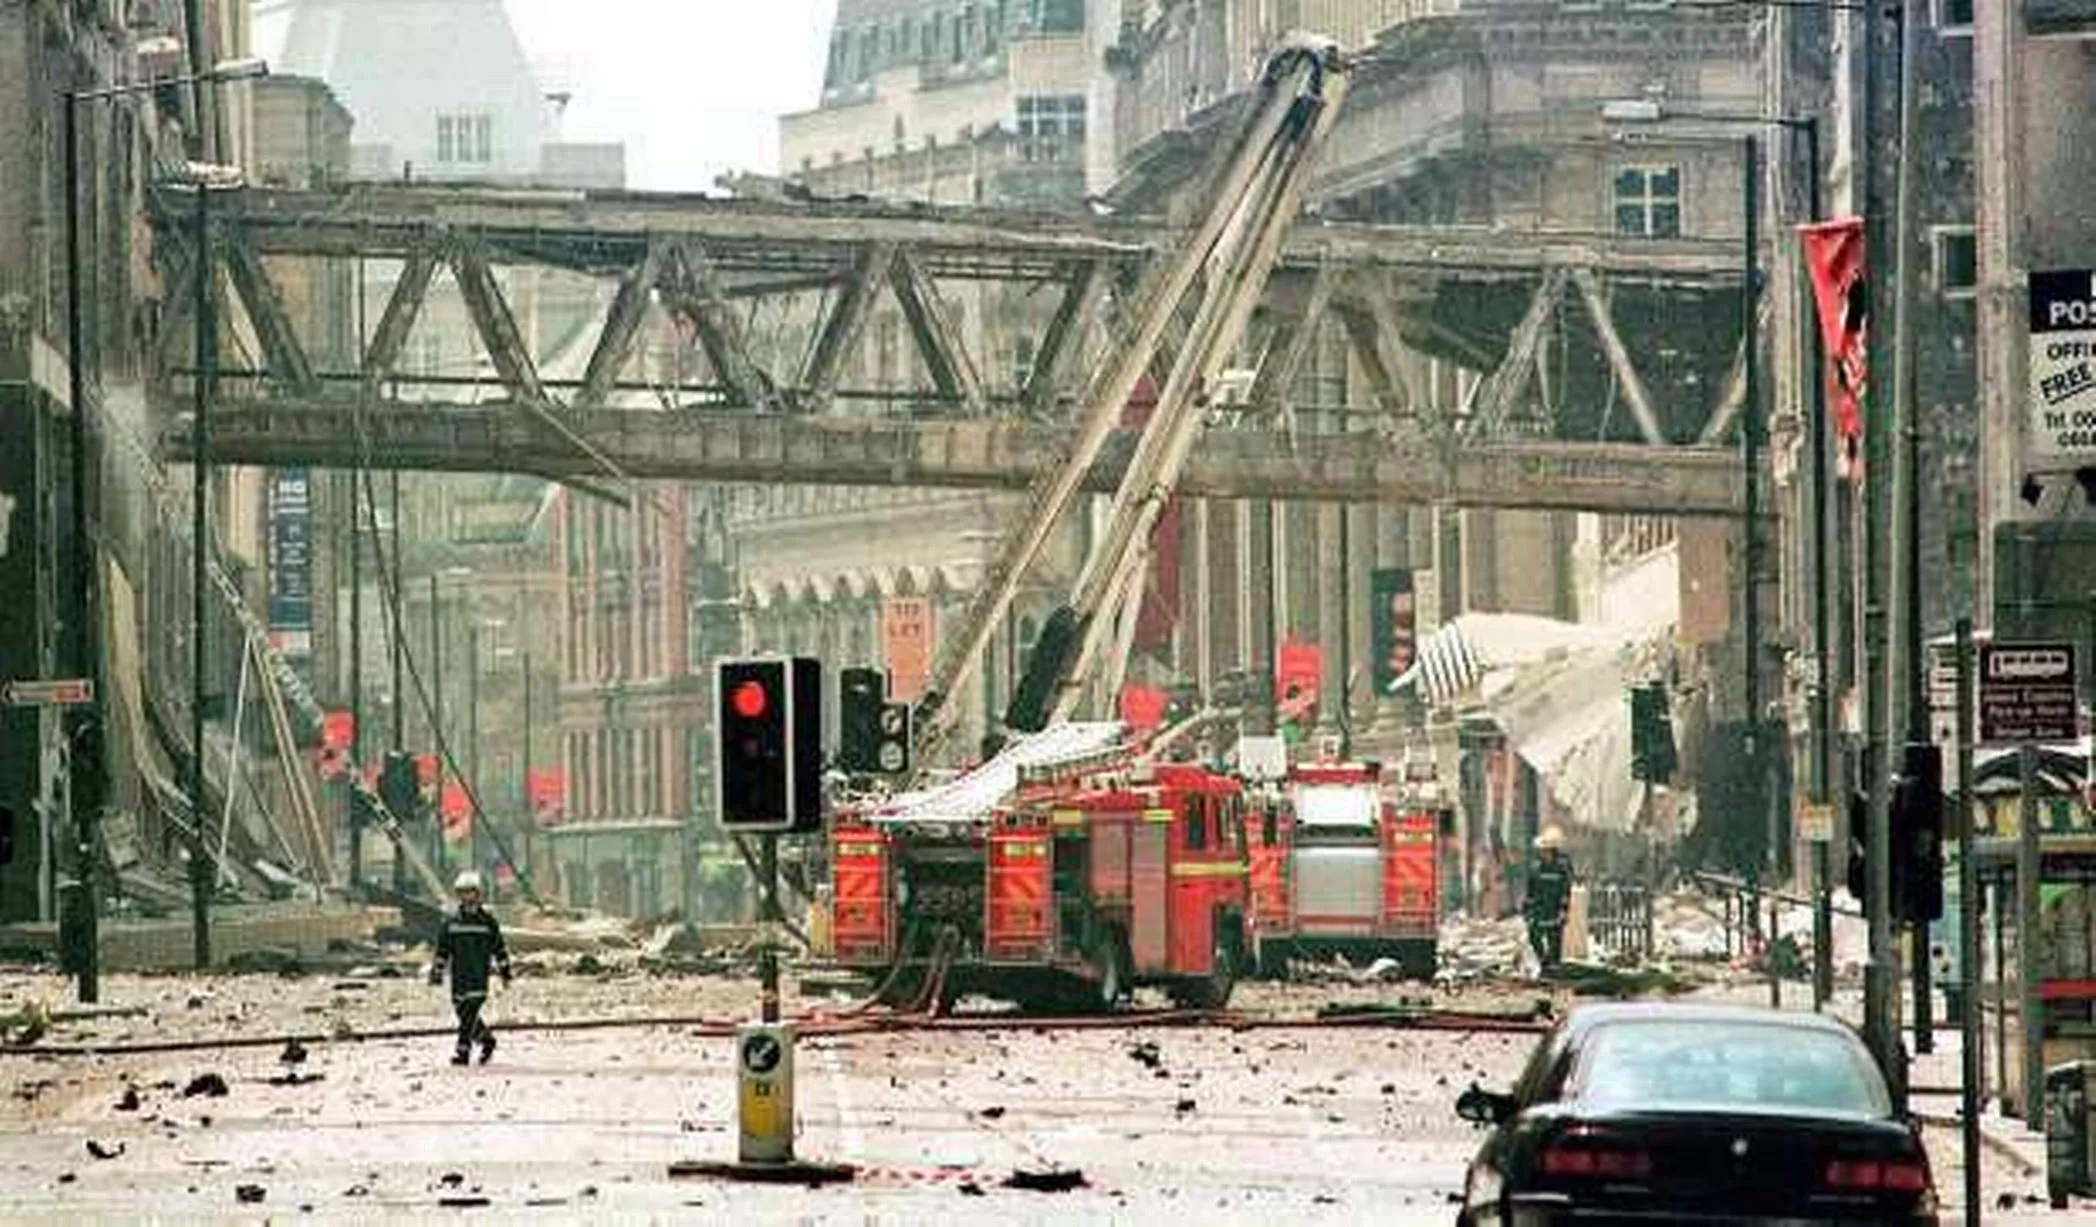 Safety fears shut Arndale bridge that rose from IRA blast - Manchester ...